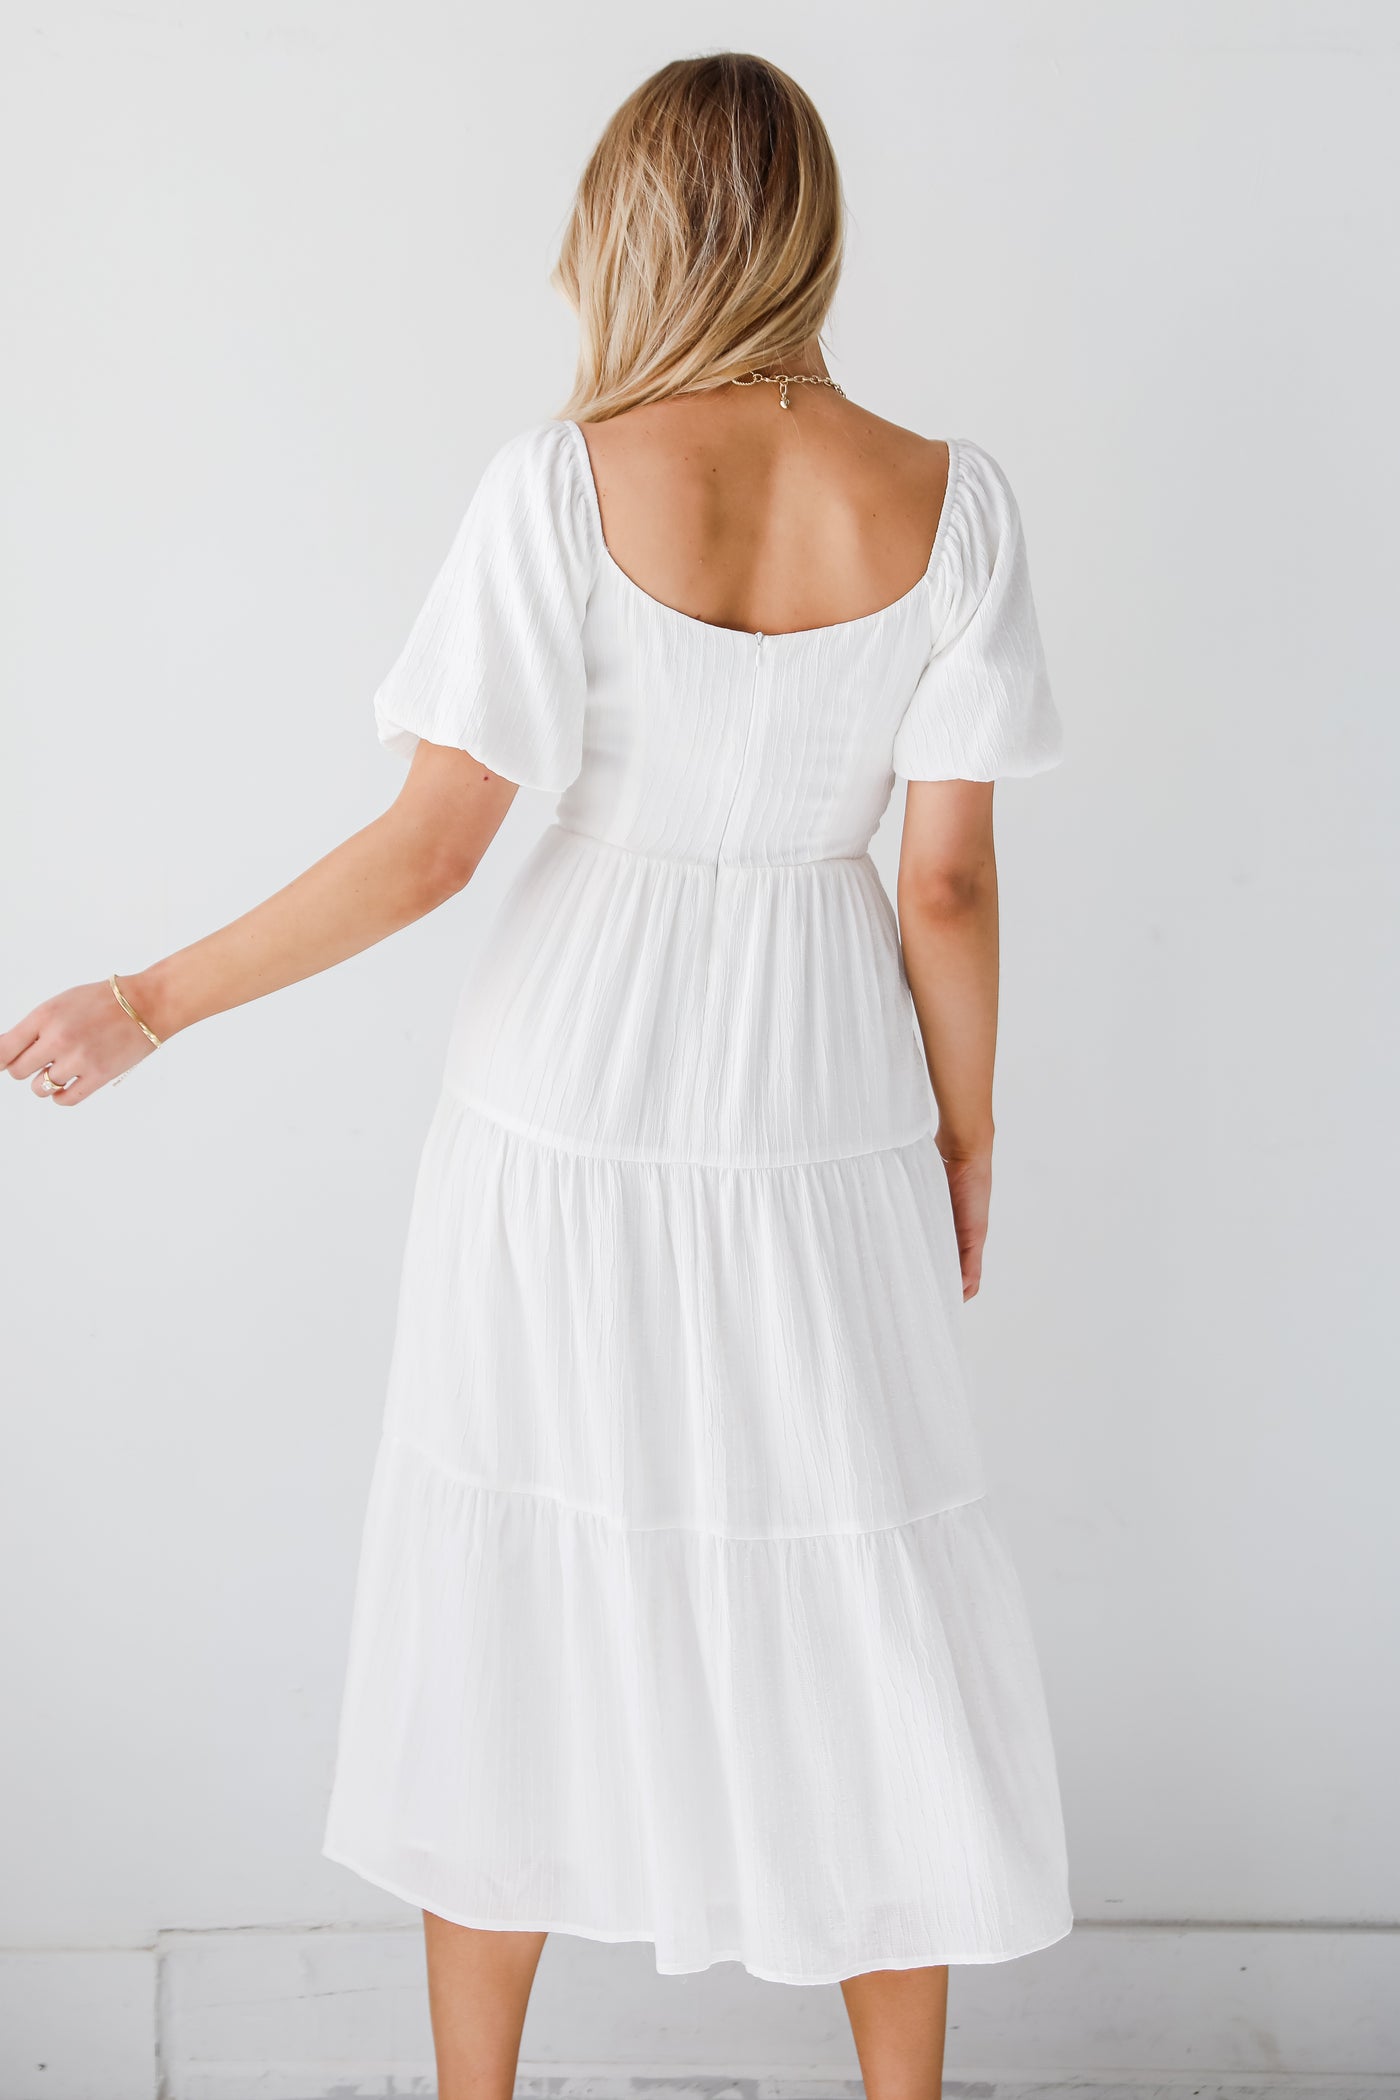 white bachelorette dress Completely Precious White Tiered Midi Dress